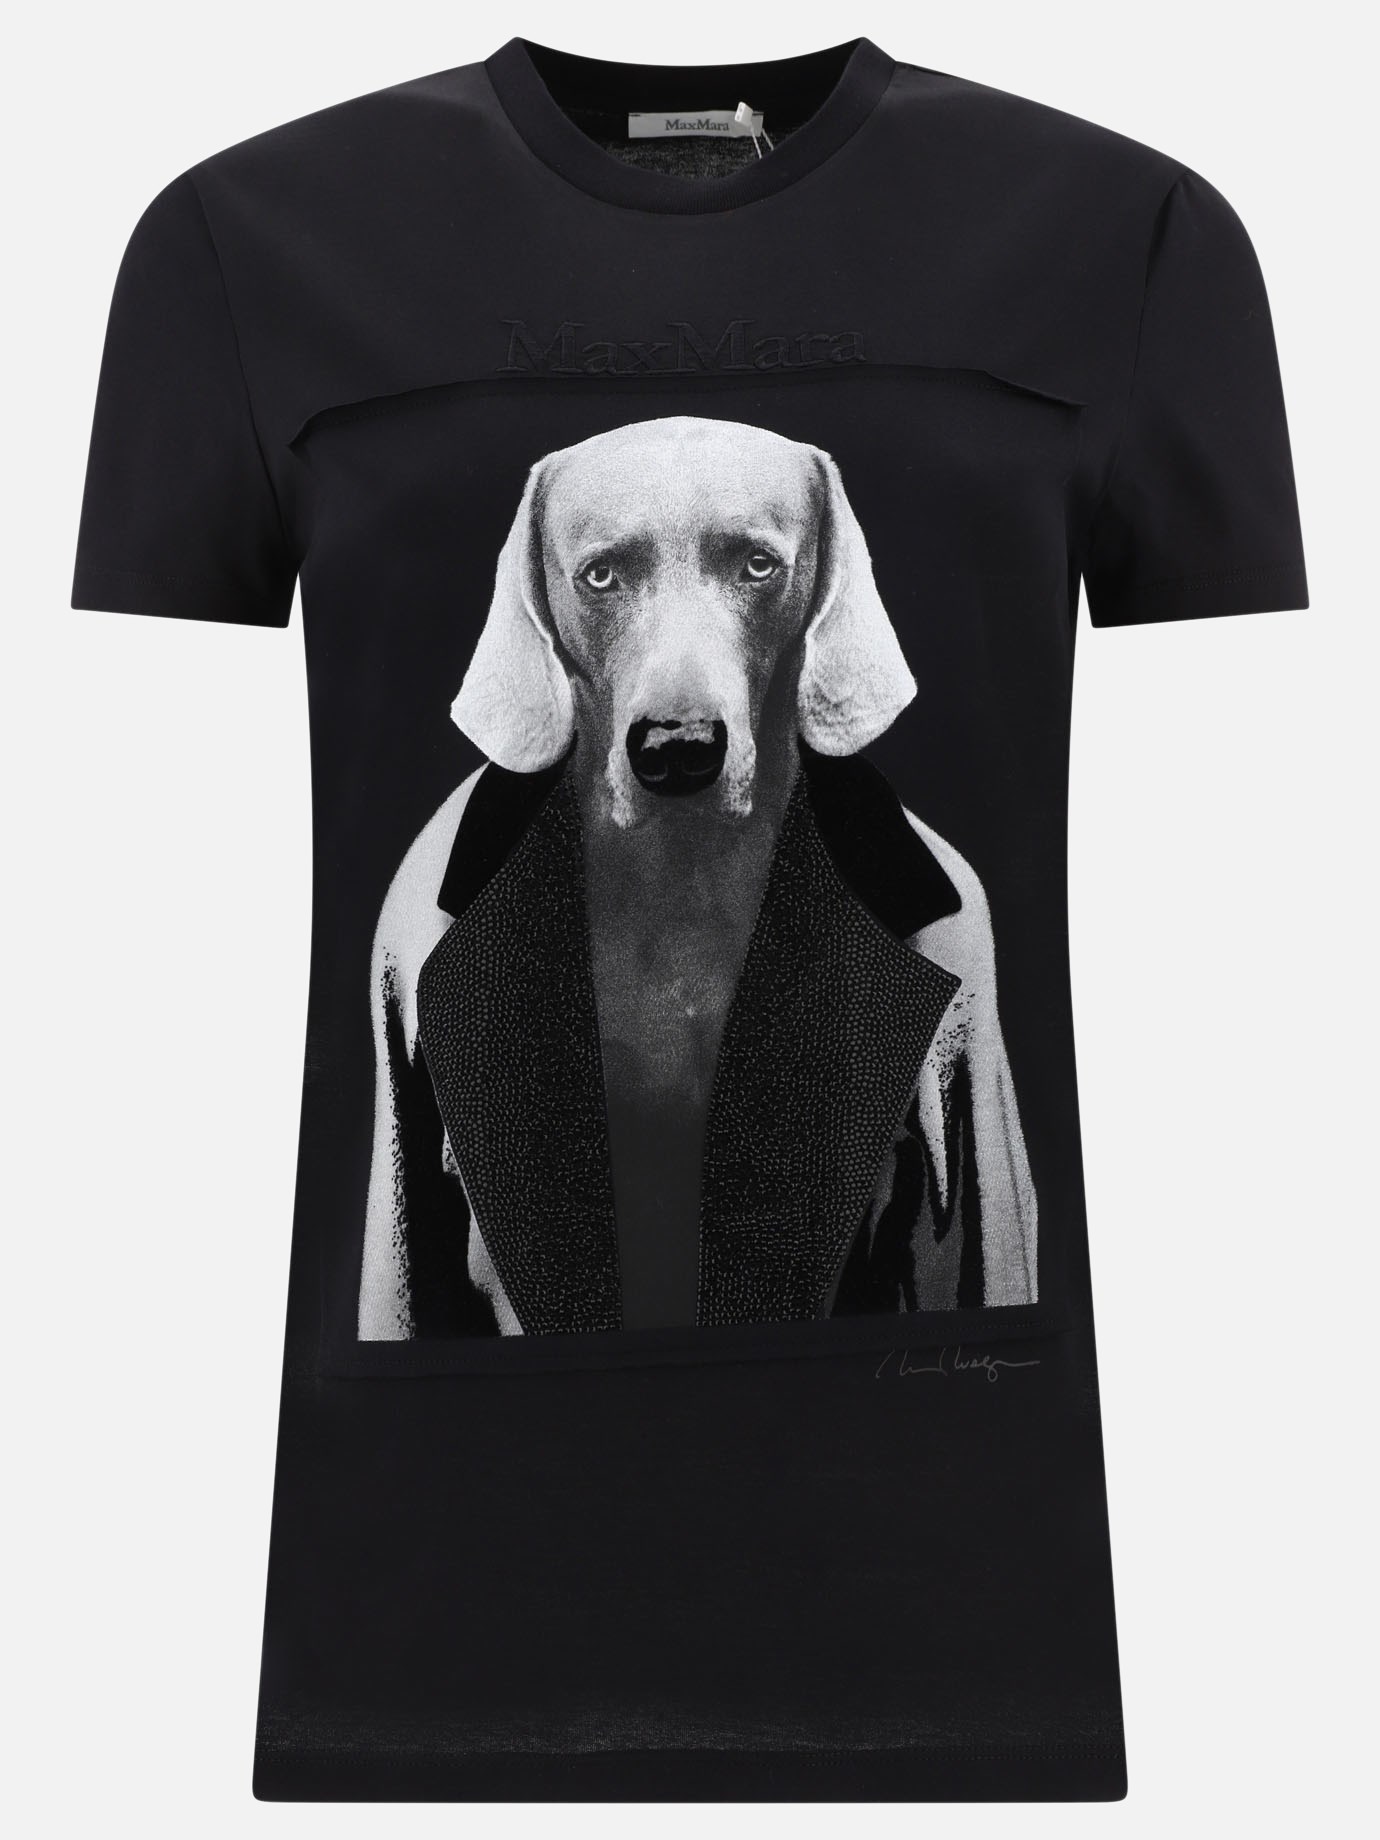  MM Dog  t-shirtby Max Mara - 2